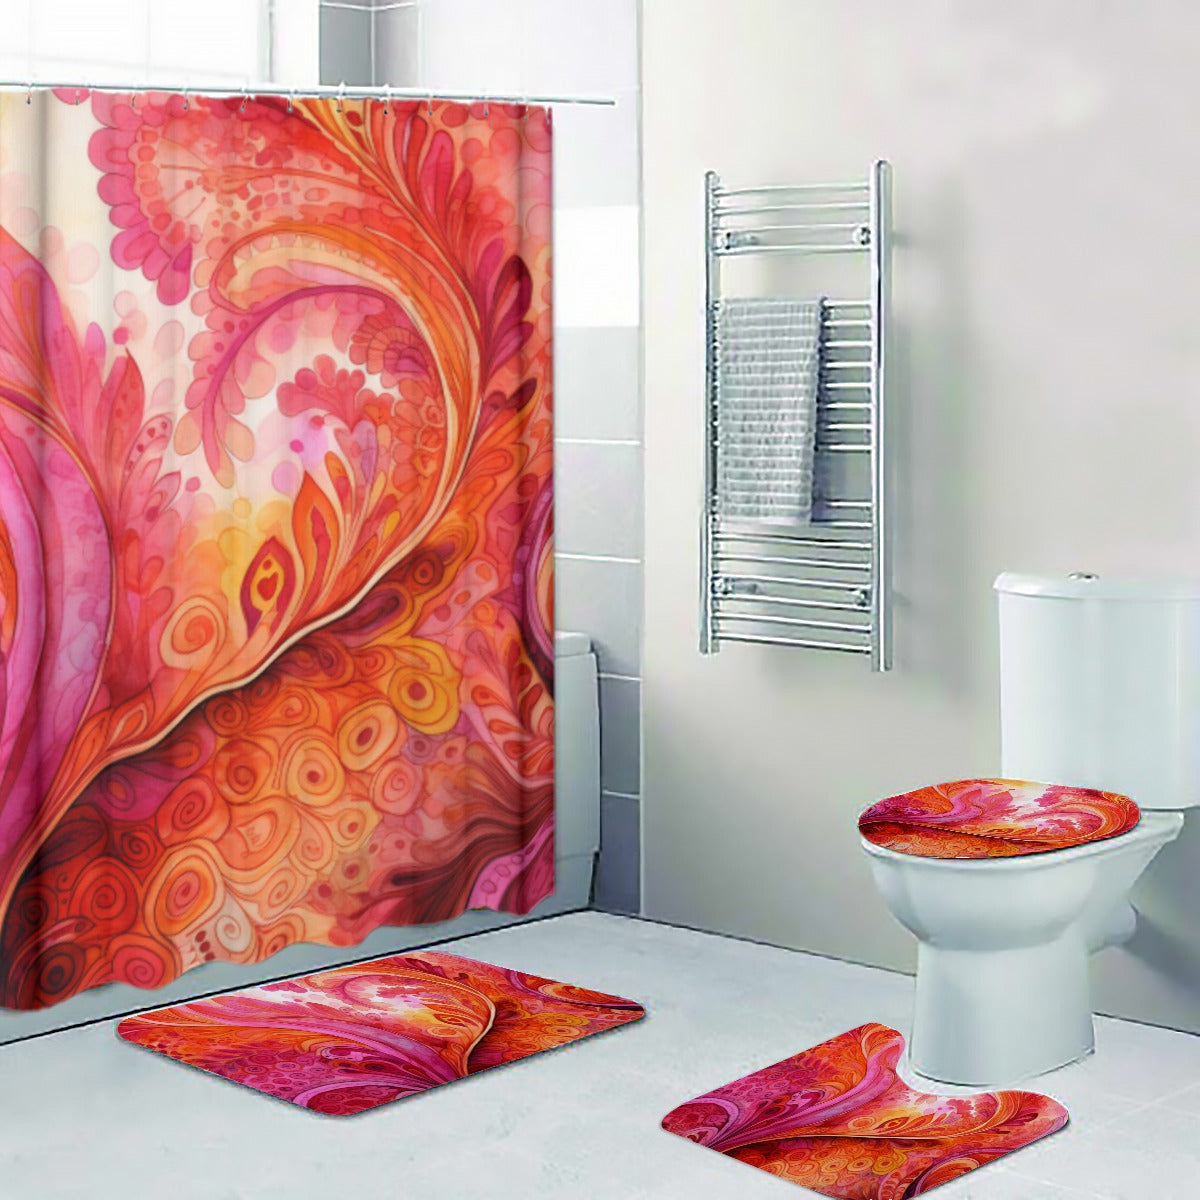 Bathroom set in Colour of the year: Four-piece Bathroom